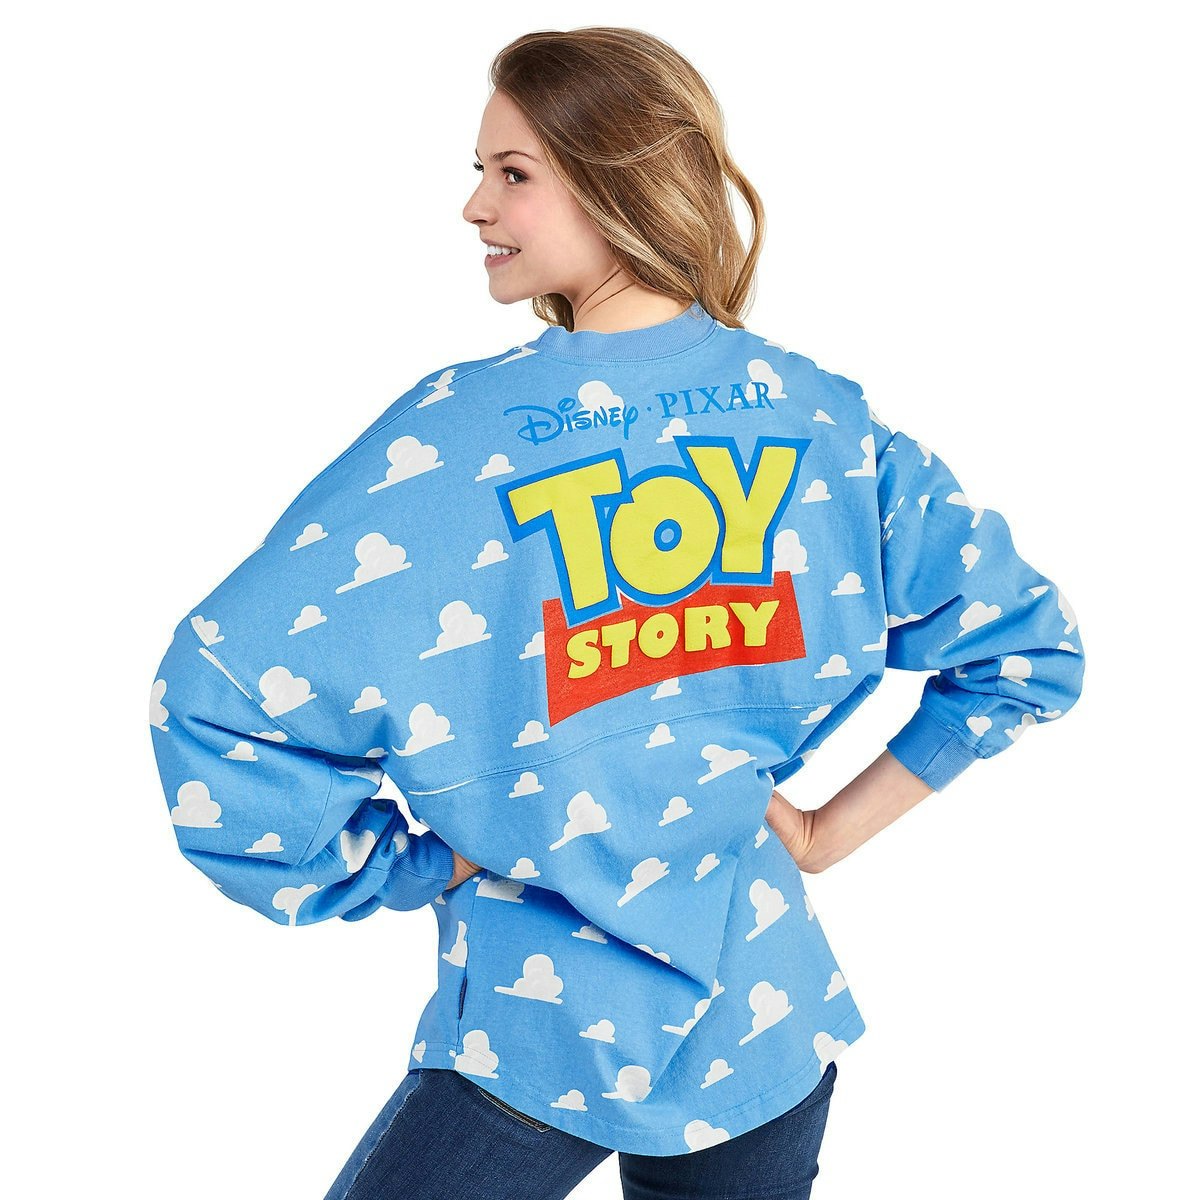 This 'Toy Story' Disney Spirit Jersey 